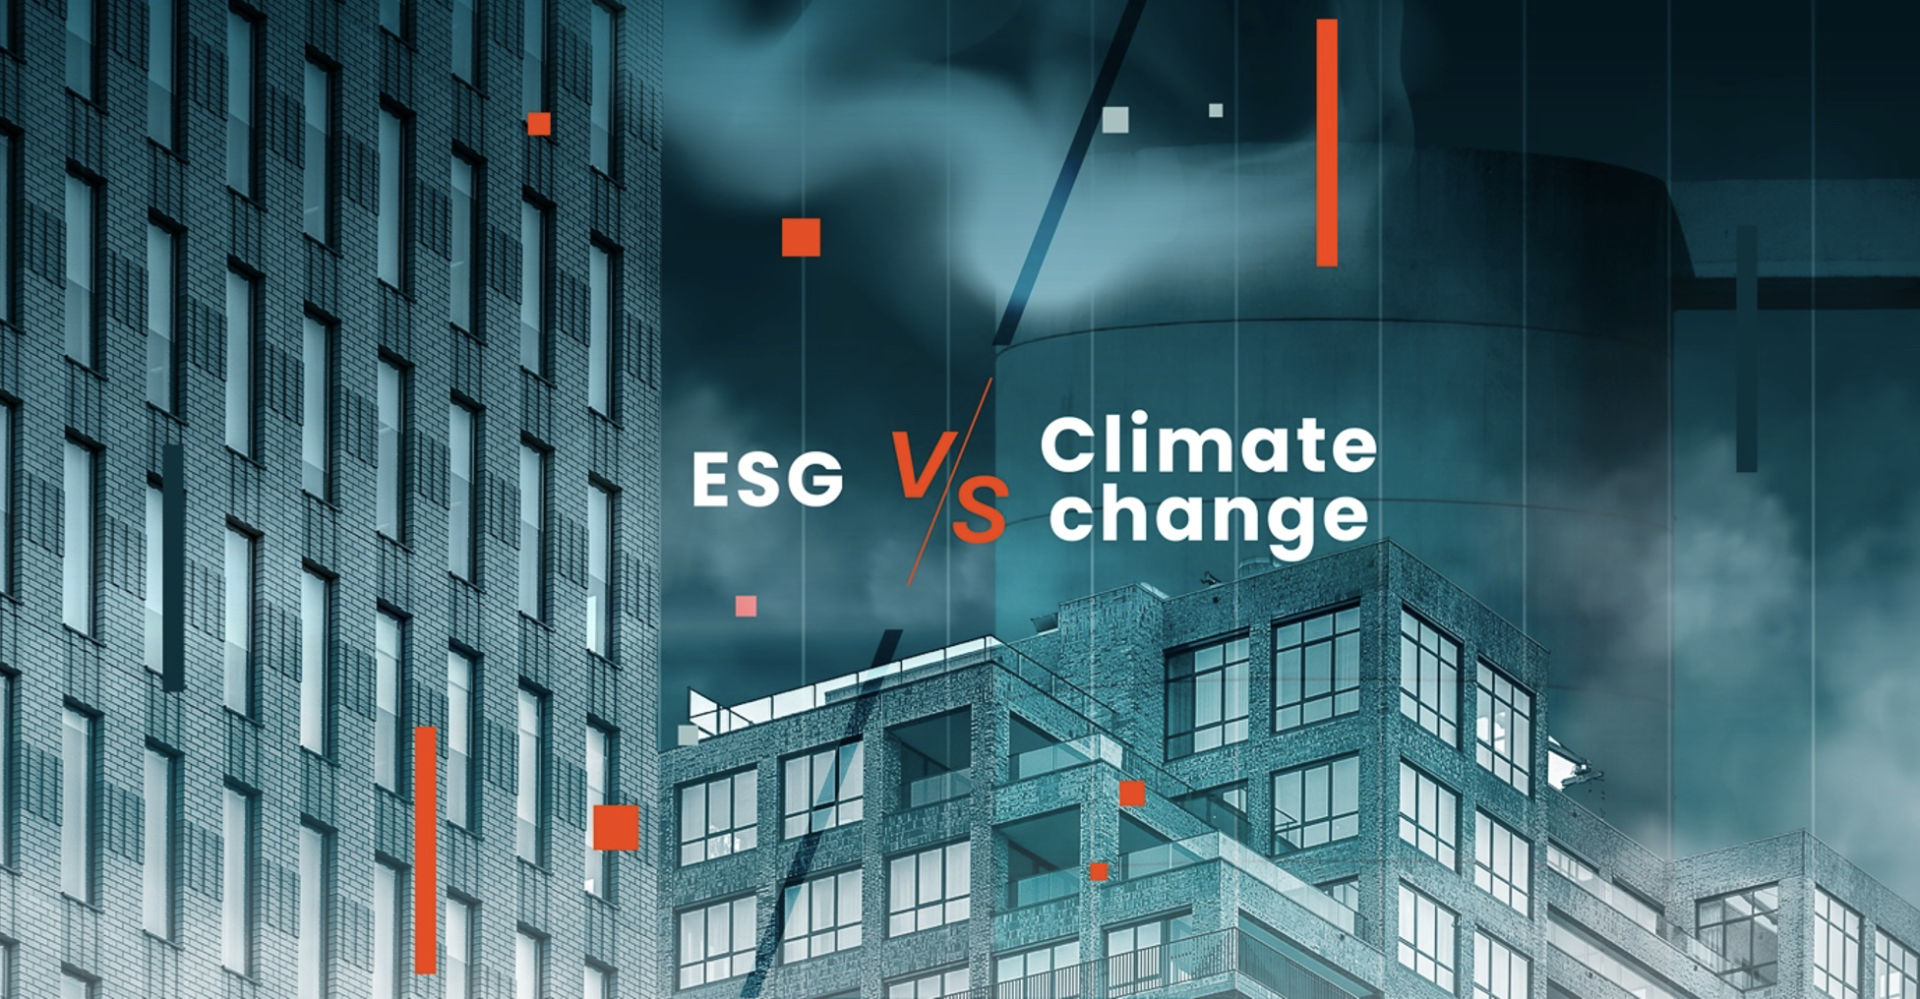 esg vs climate change